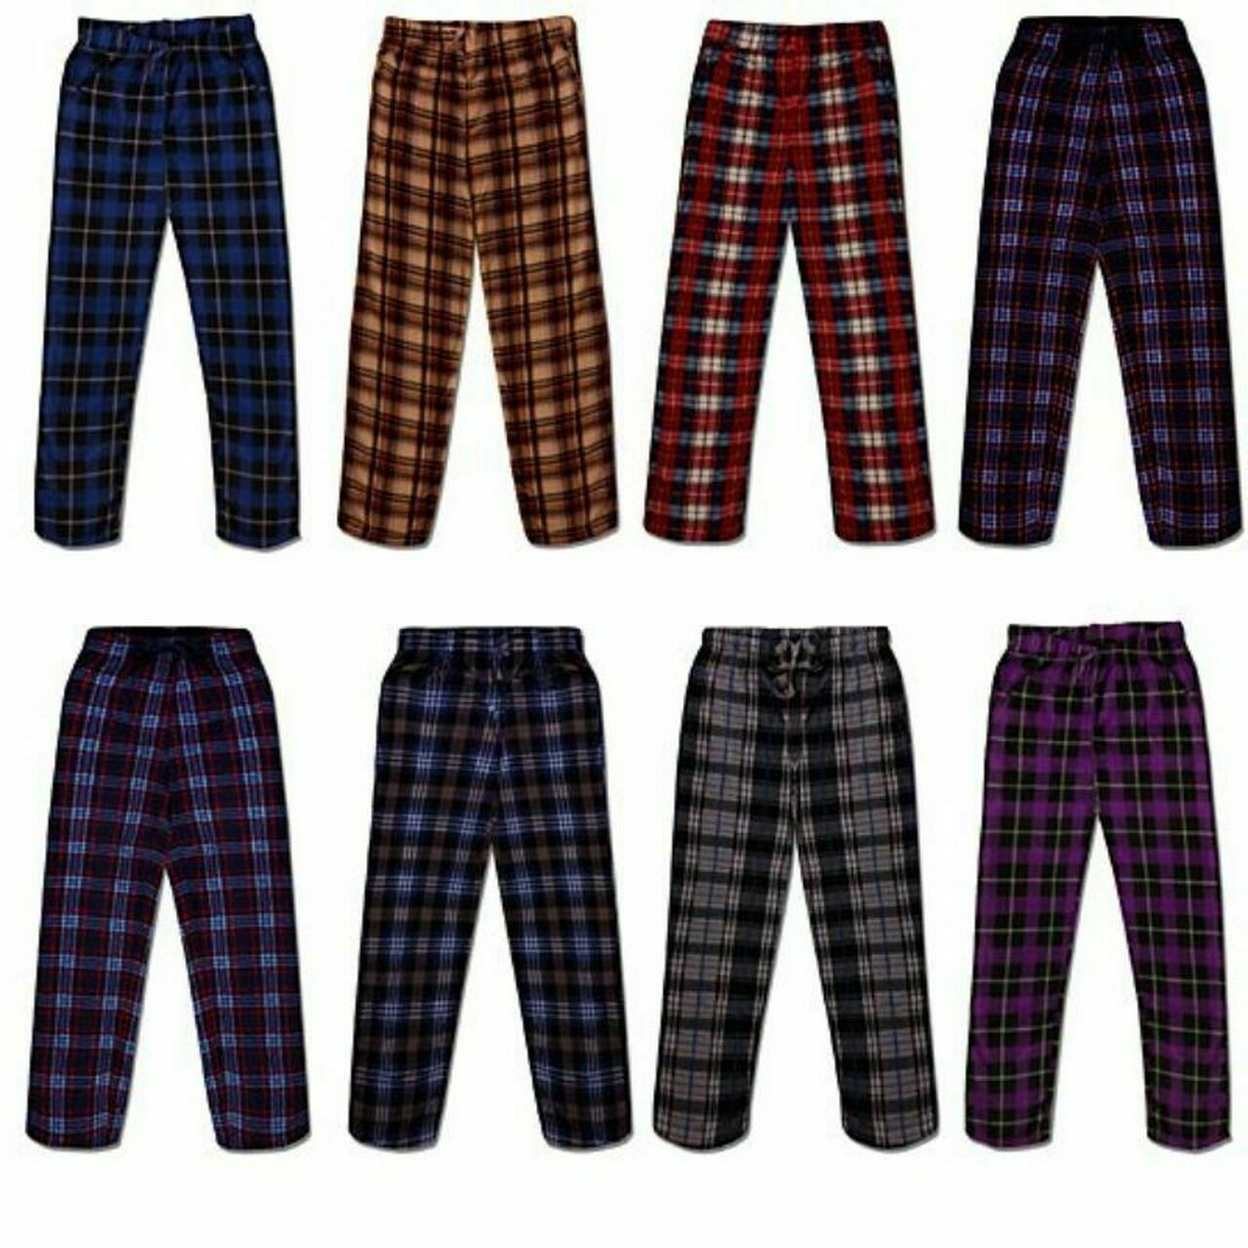 2-Pack: Men's Ultra Soft Cozy Flannel Fleece Plaid Pajama Sleep Bottom Lounge Pants - Red & Blue, Small